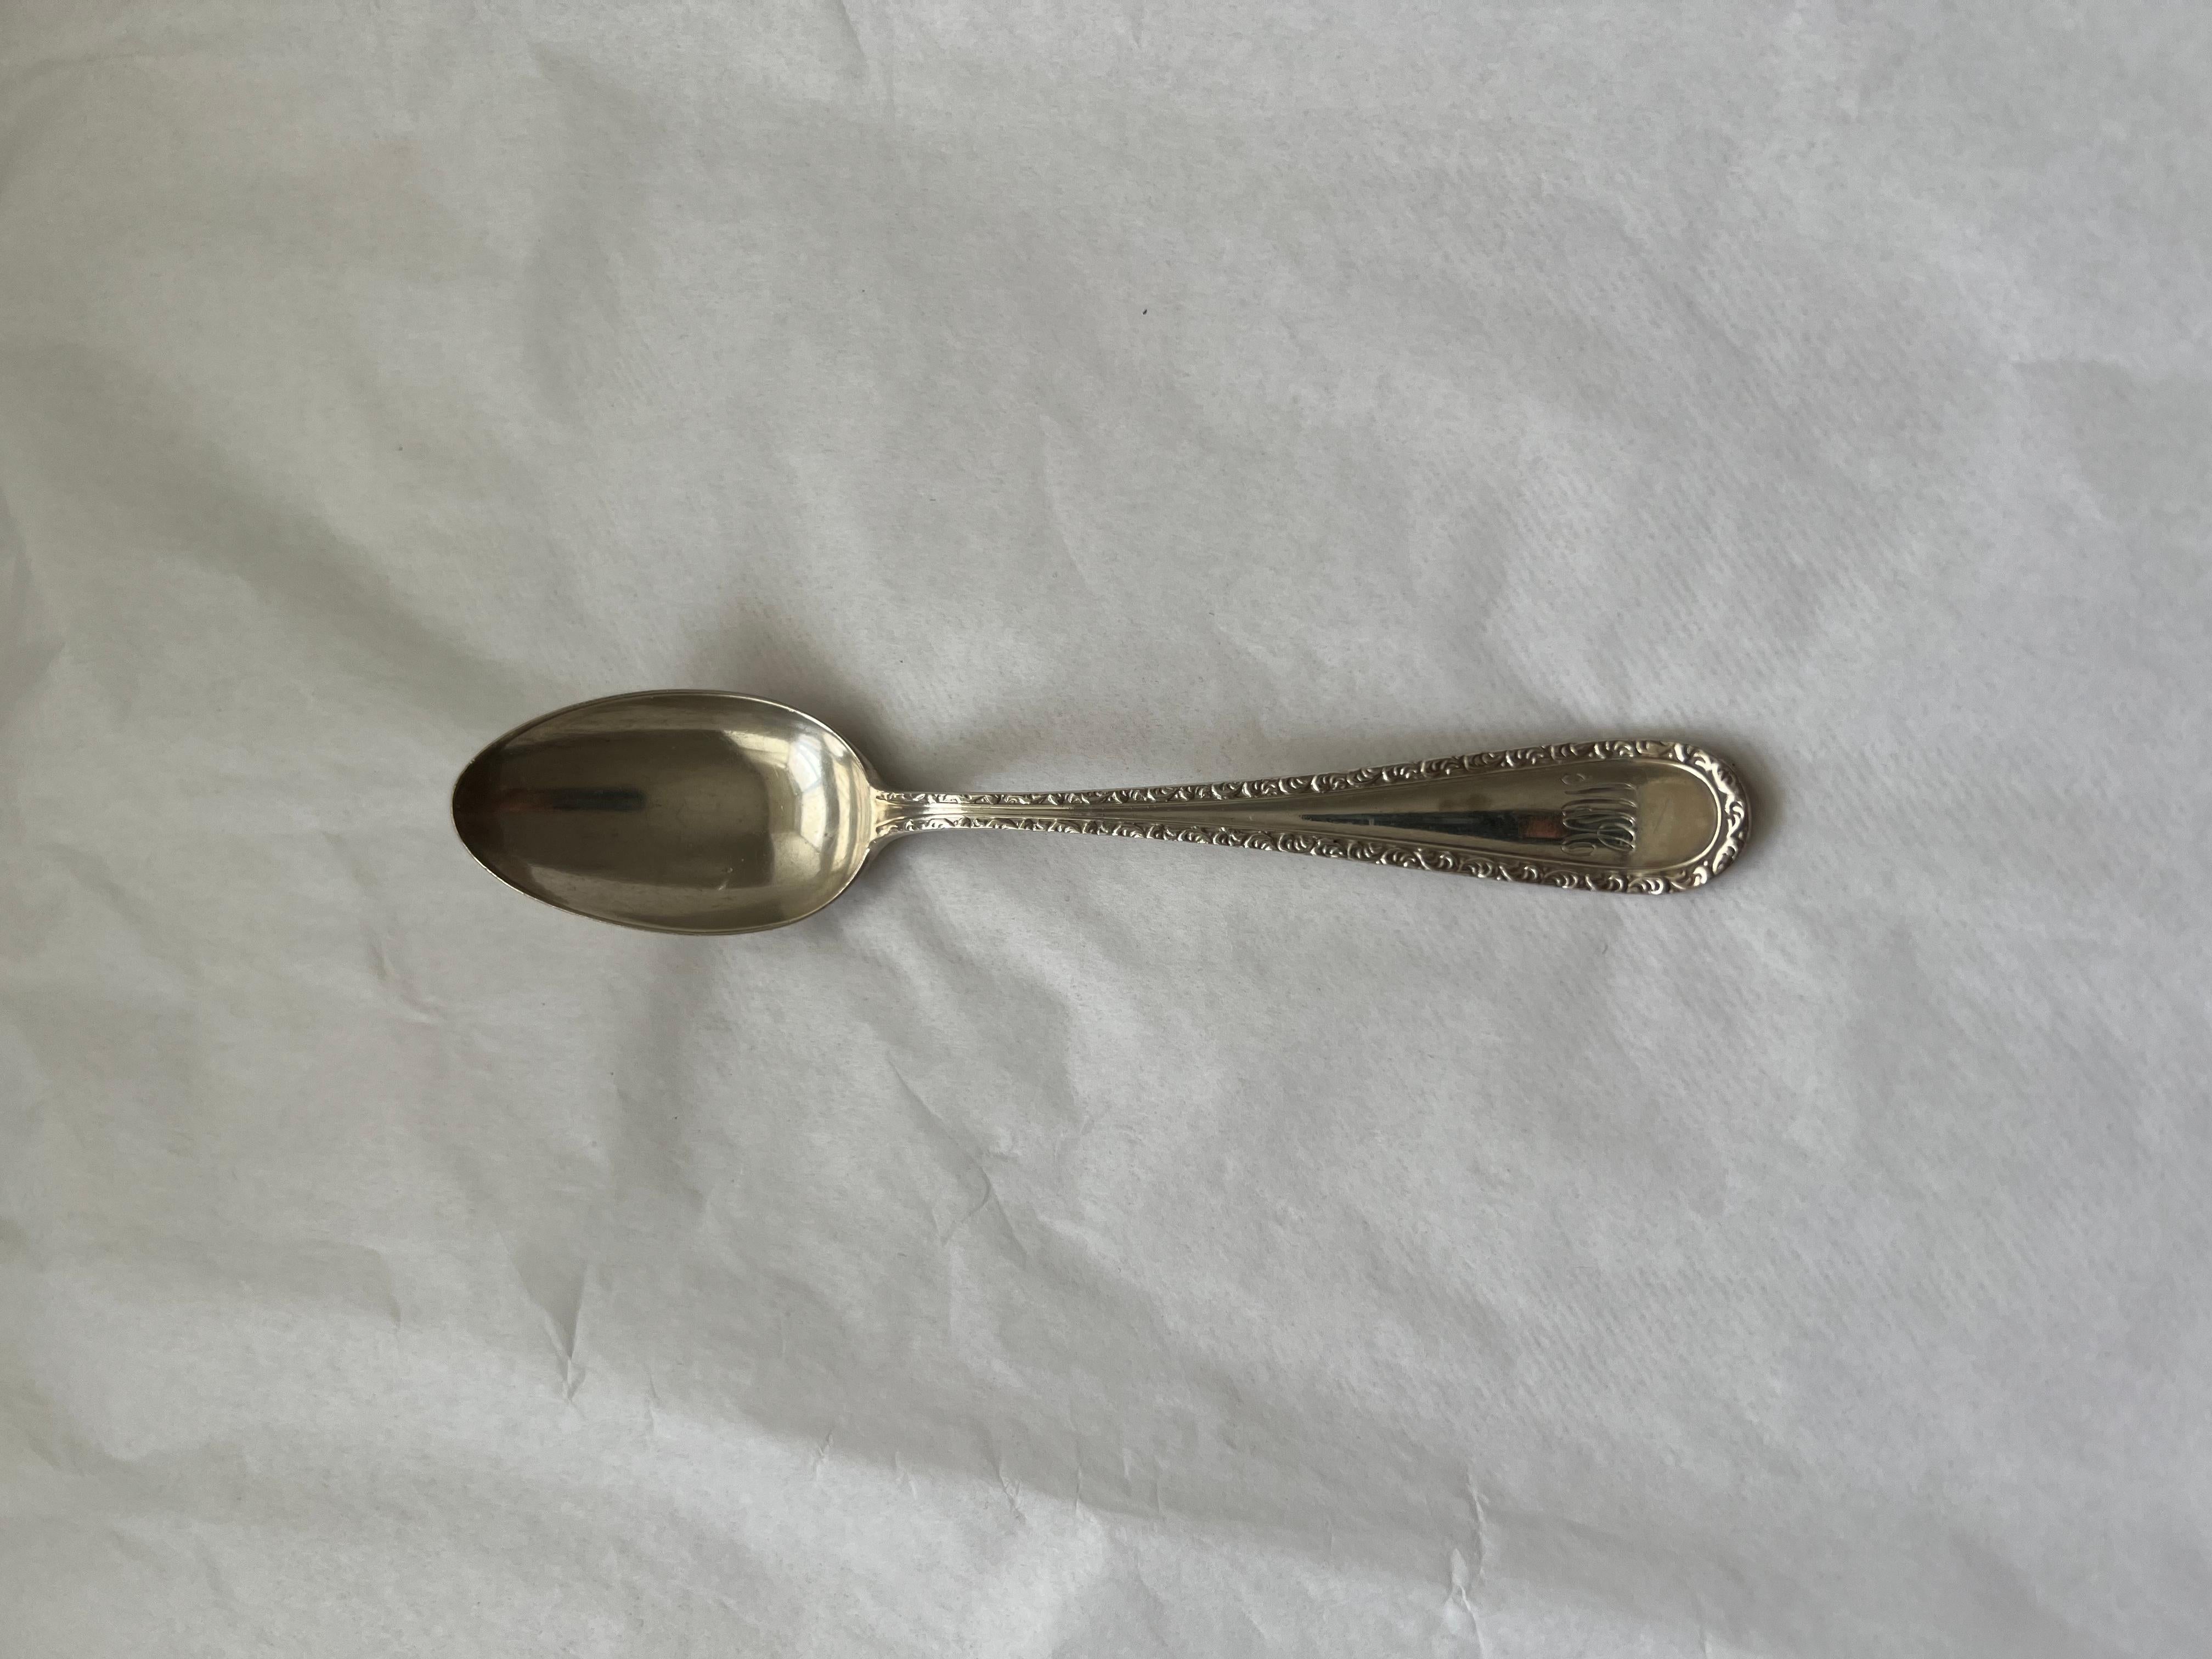 is a small spoon a teaspoon